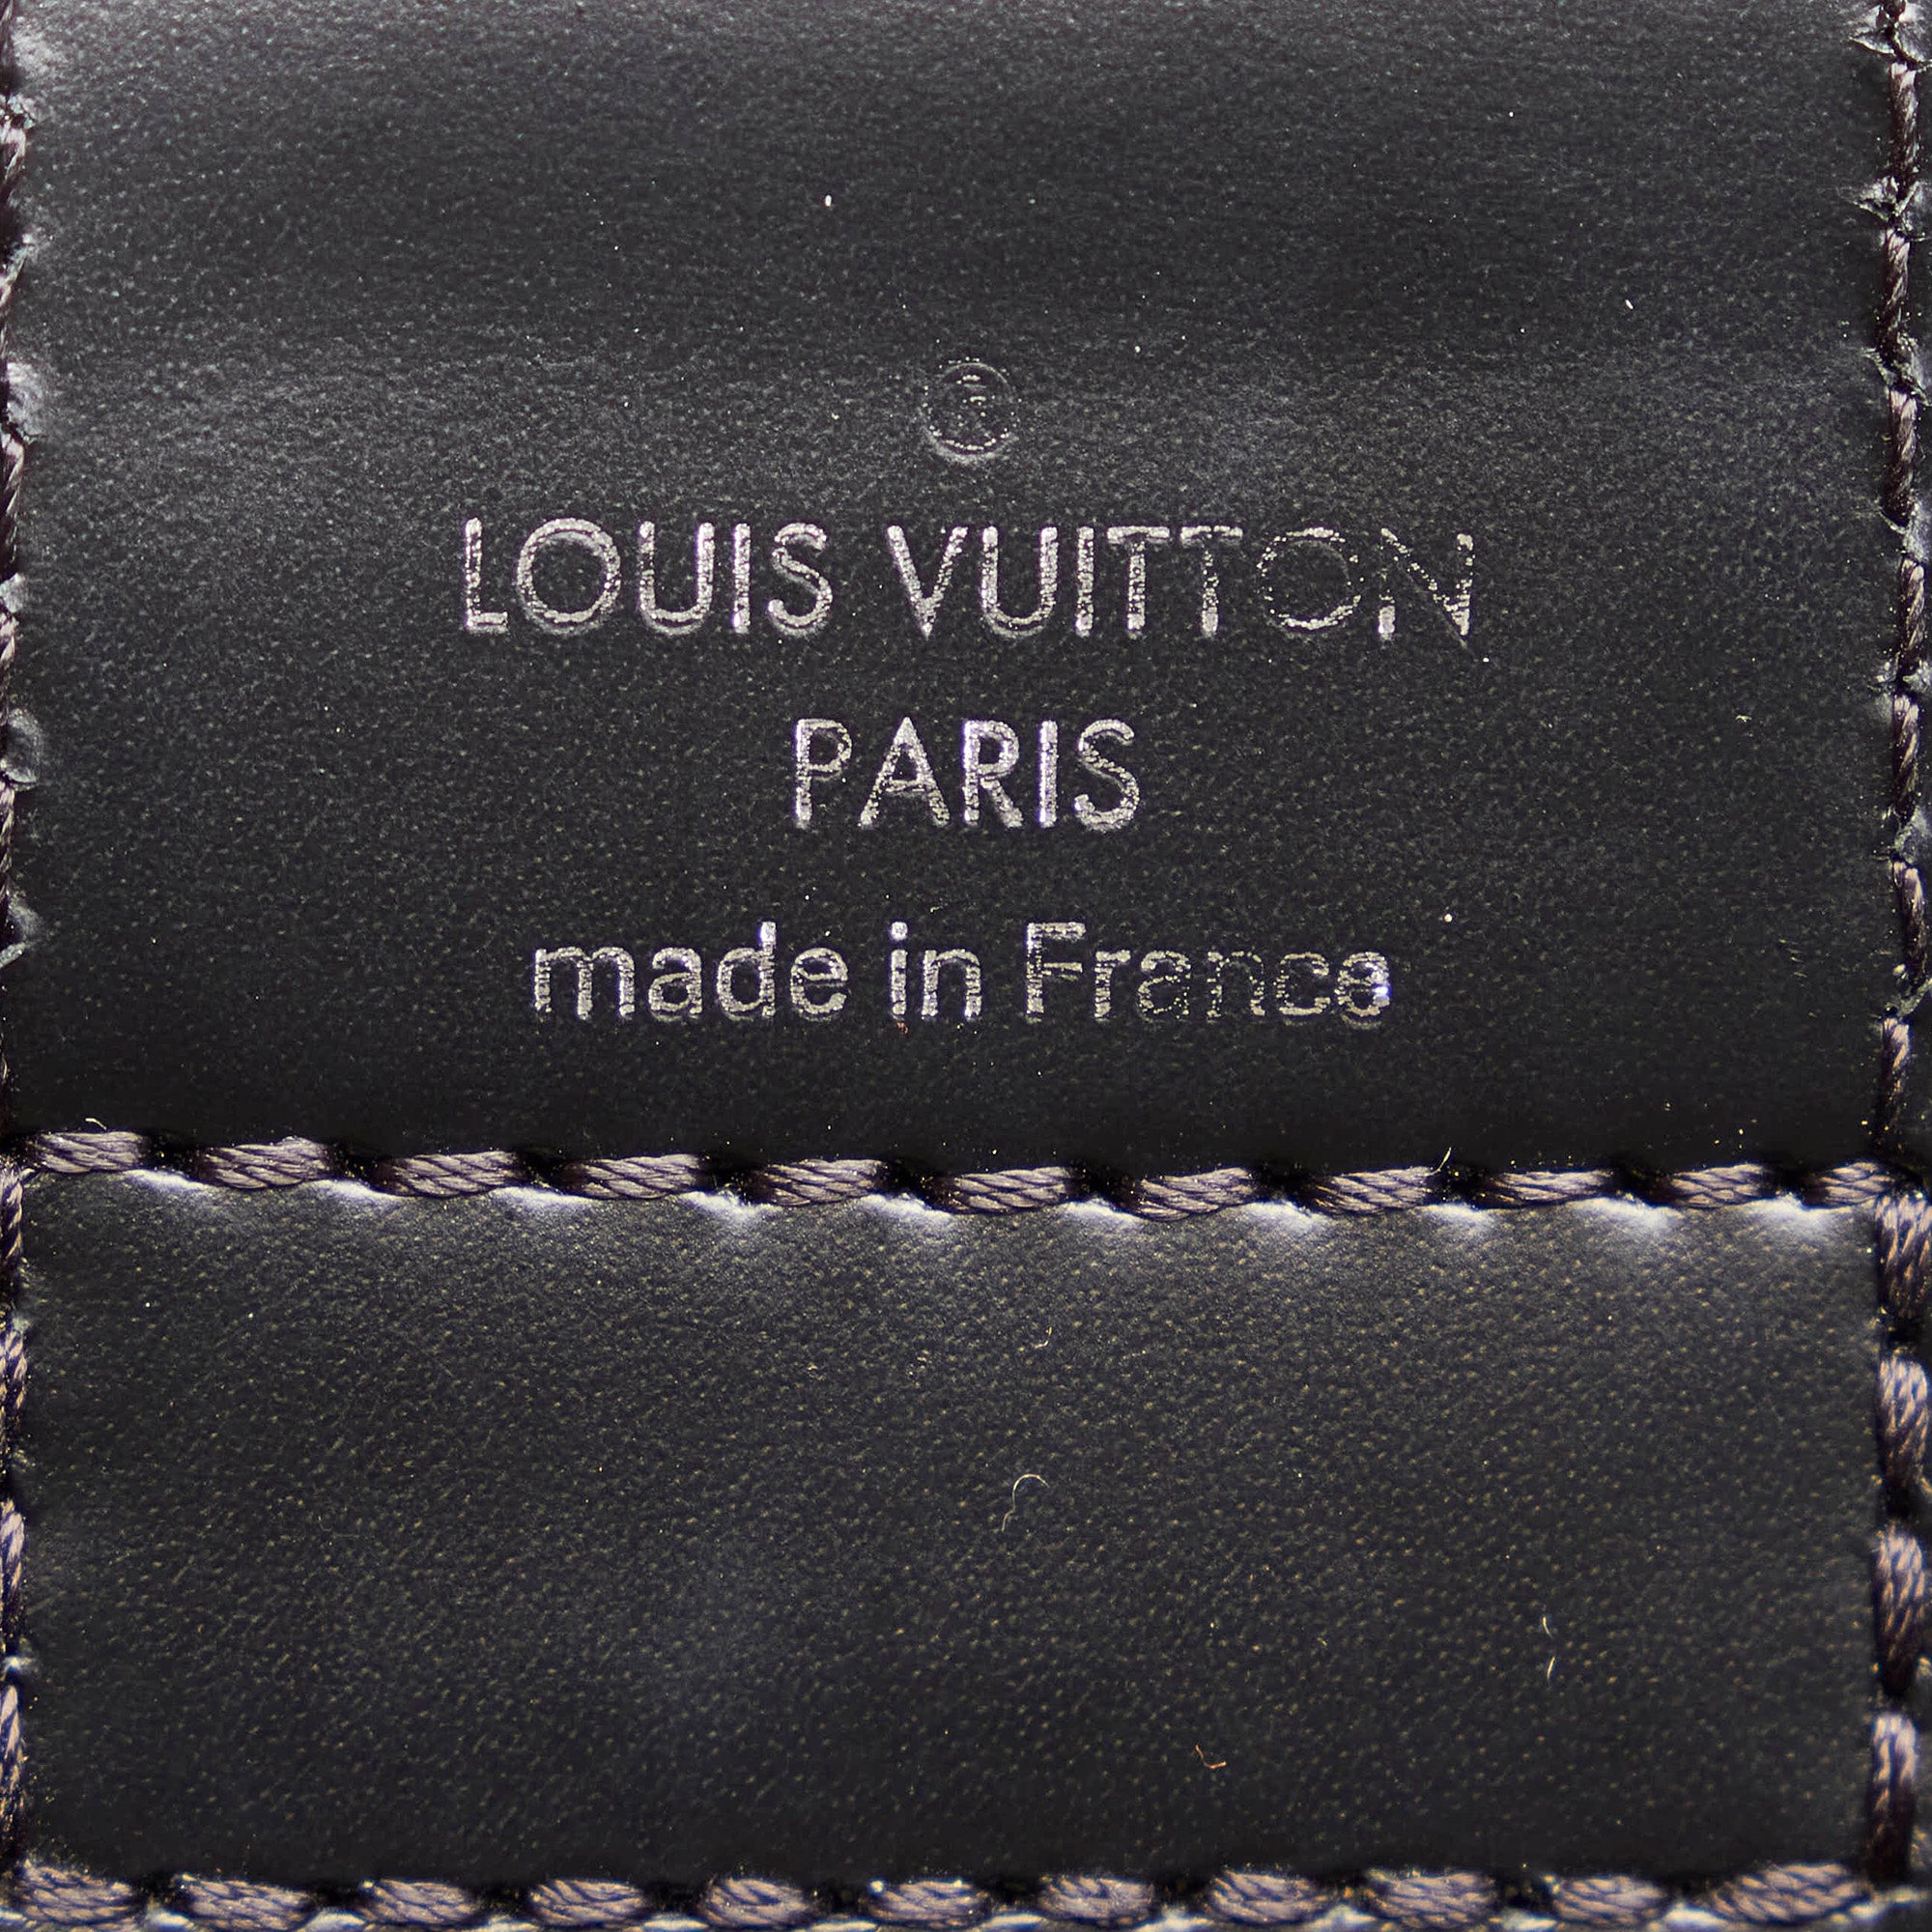 Preloved Louis Vuitton Epi Kleber PM Tote Bag 032623 - $300 OFF FLASH